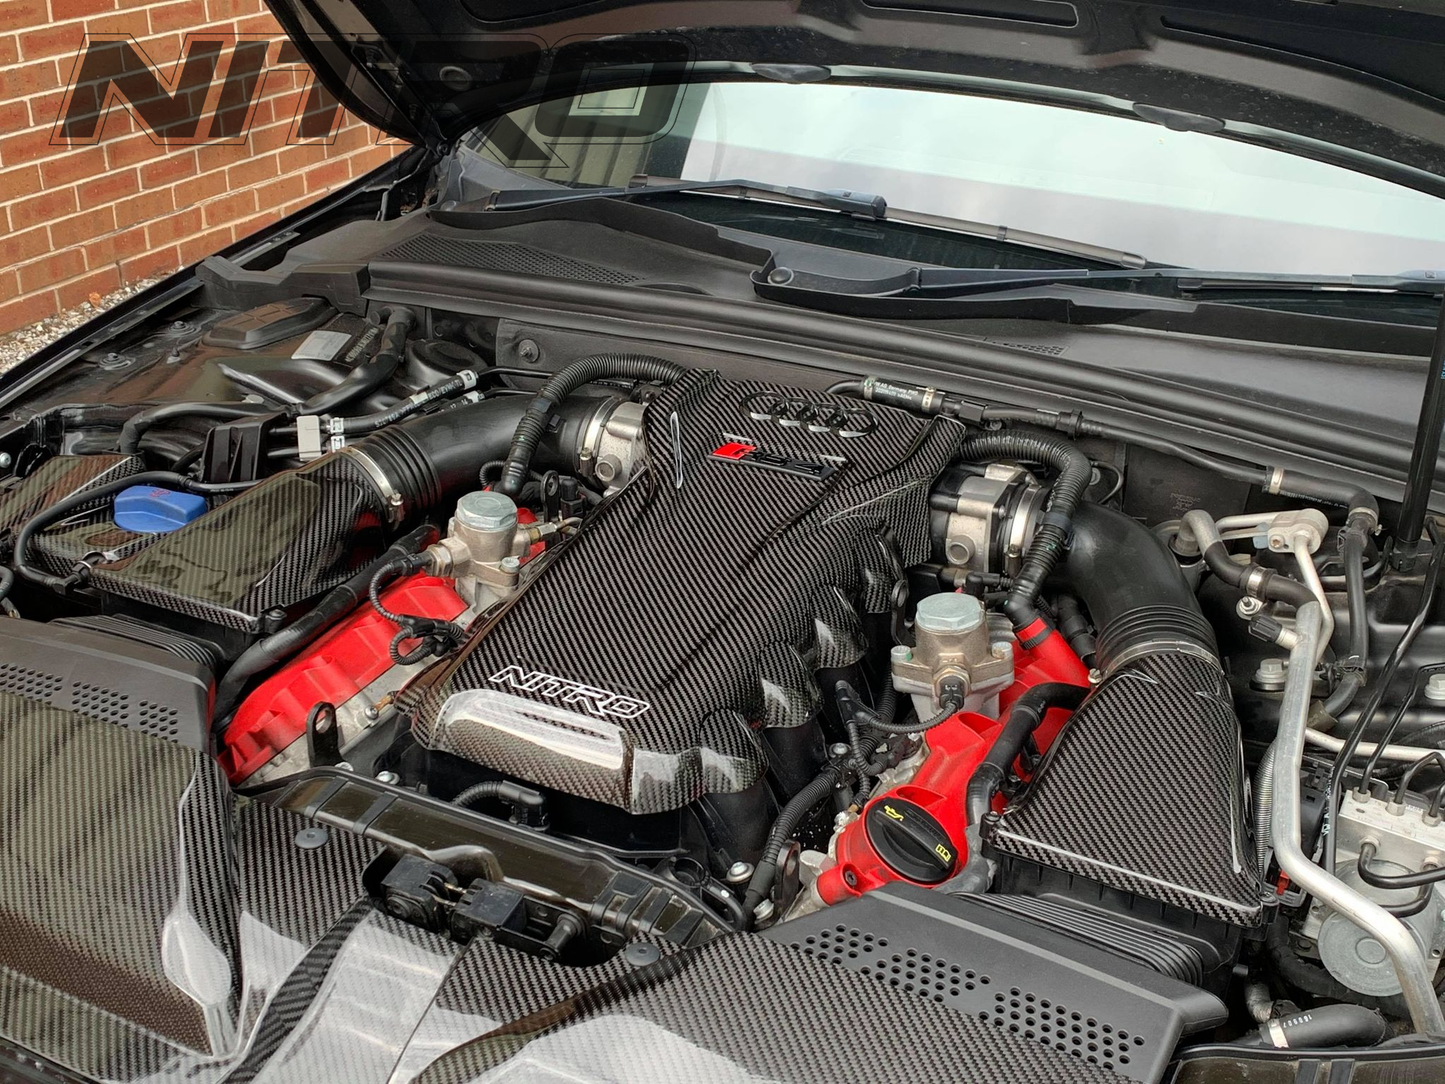 AUDI RS4 (2012-2015) B8/B8.5 Carbon Fibre Air Intake Cover for 4.2L V8 FSI